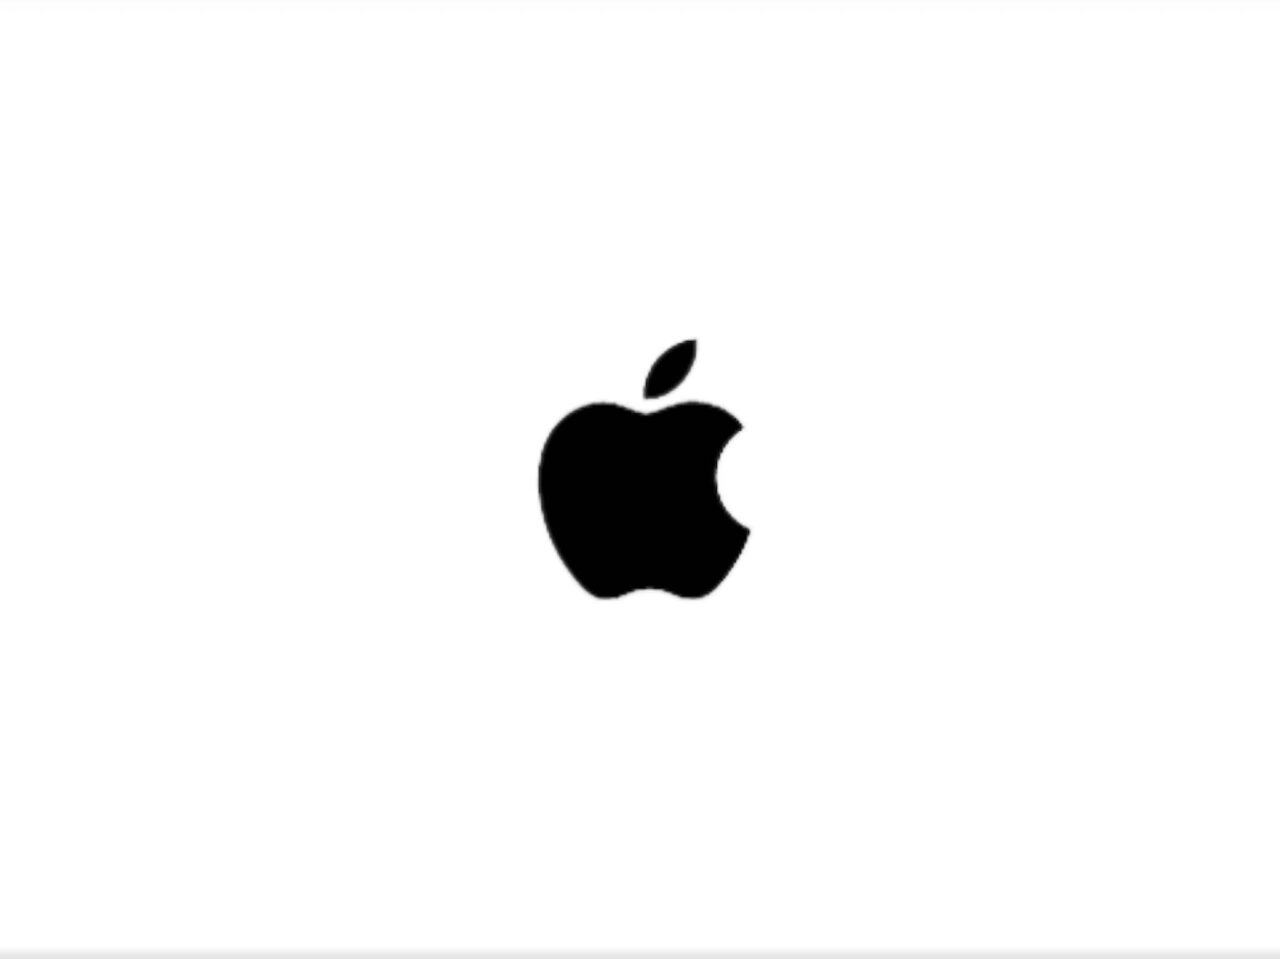 Apple logo black and white